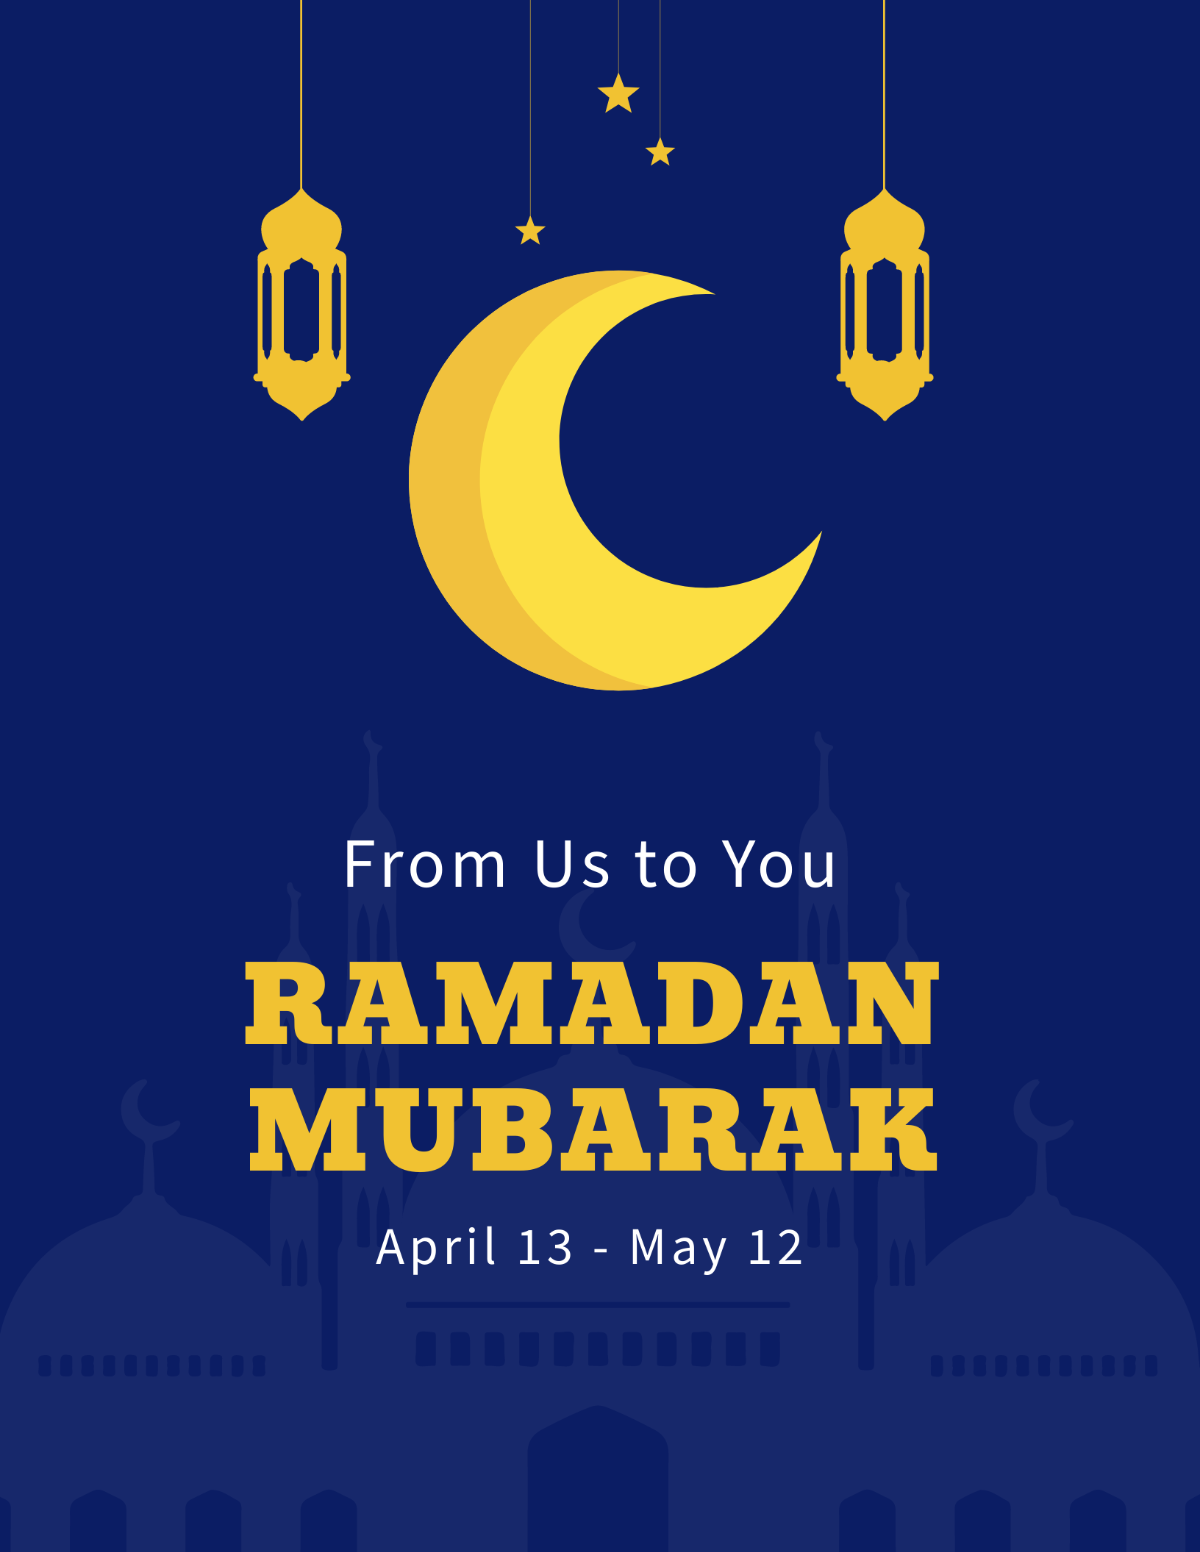 Free Ramadan Mubarak Flyer Template